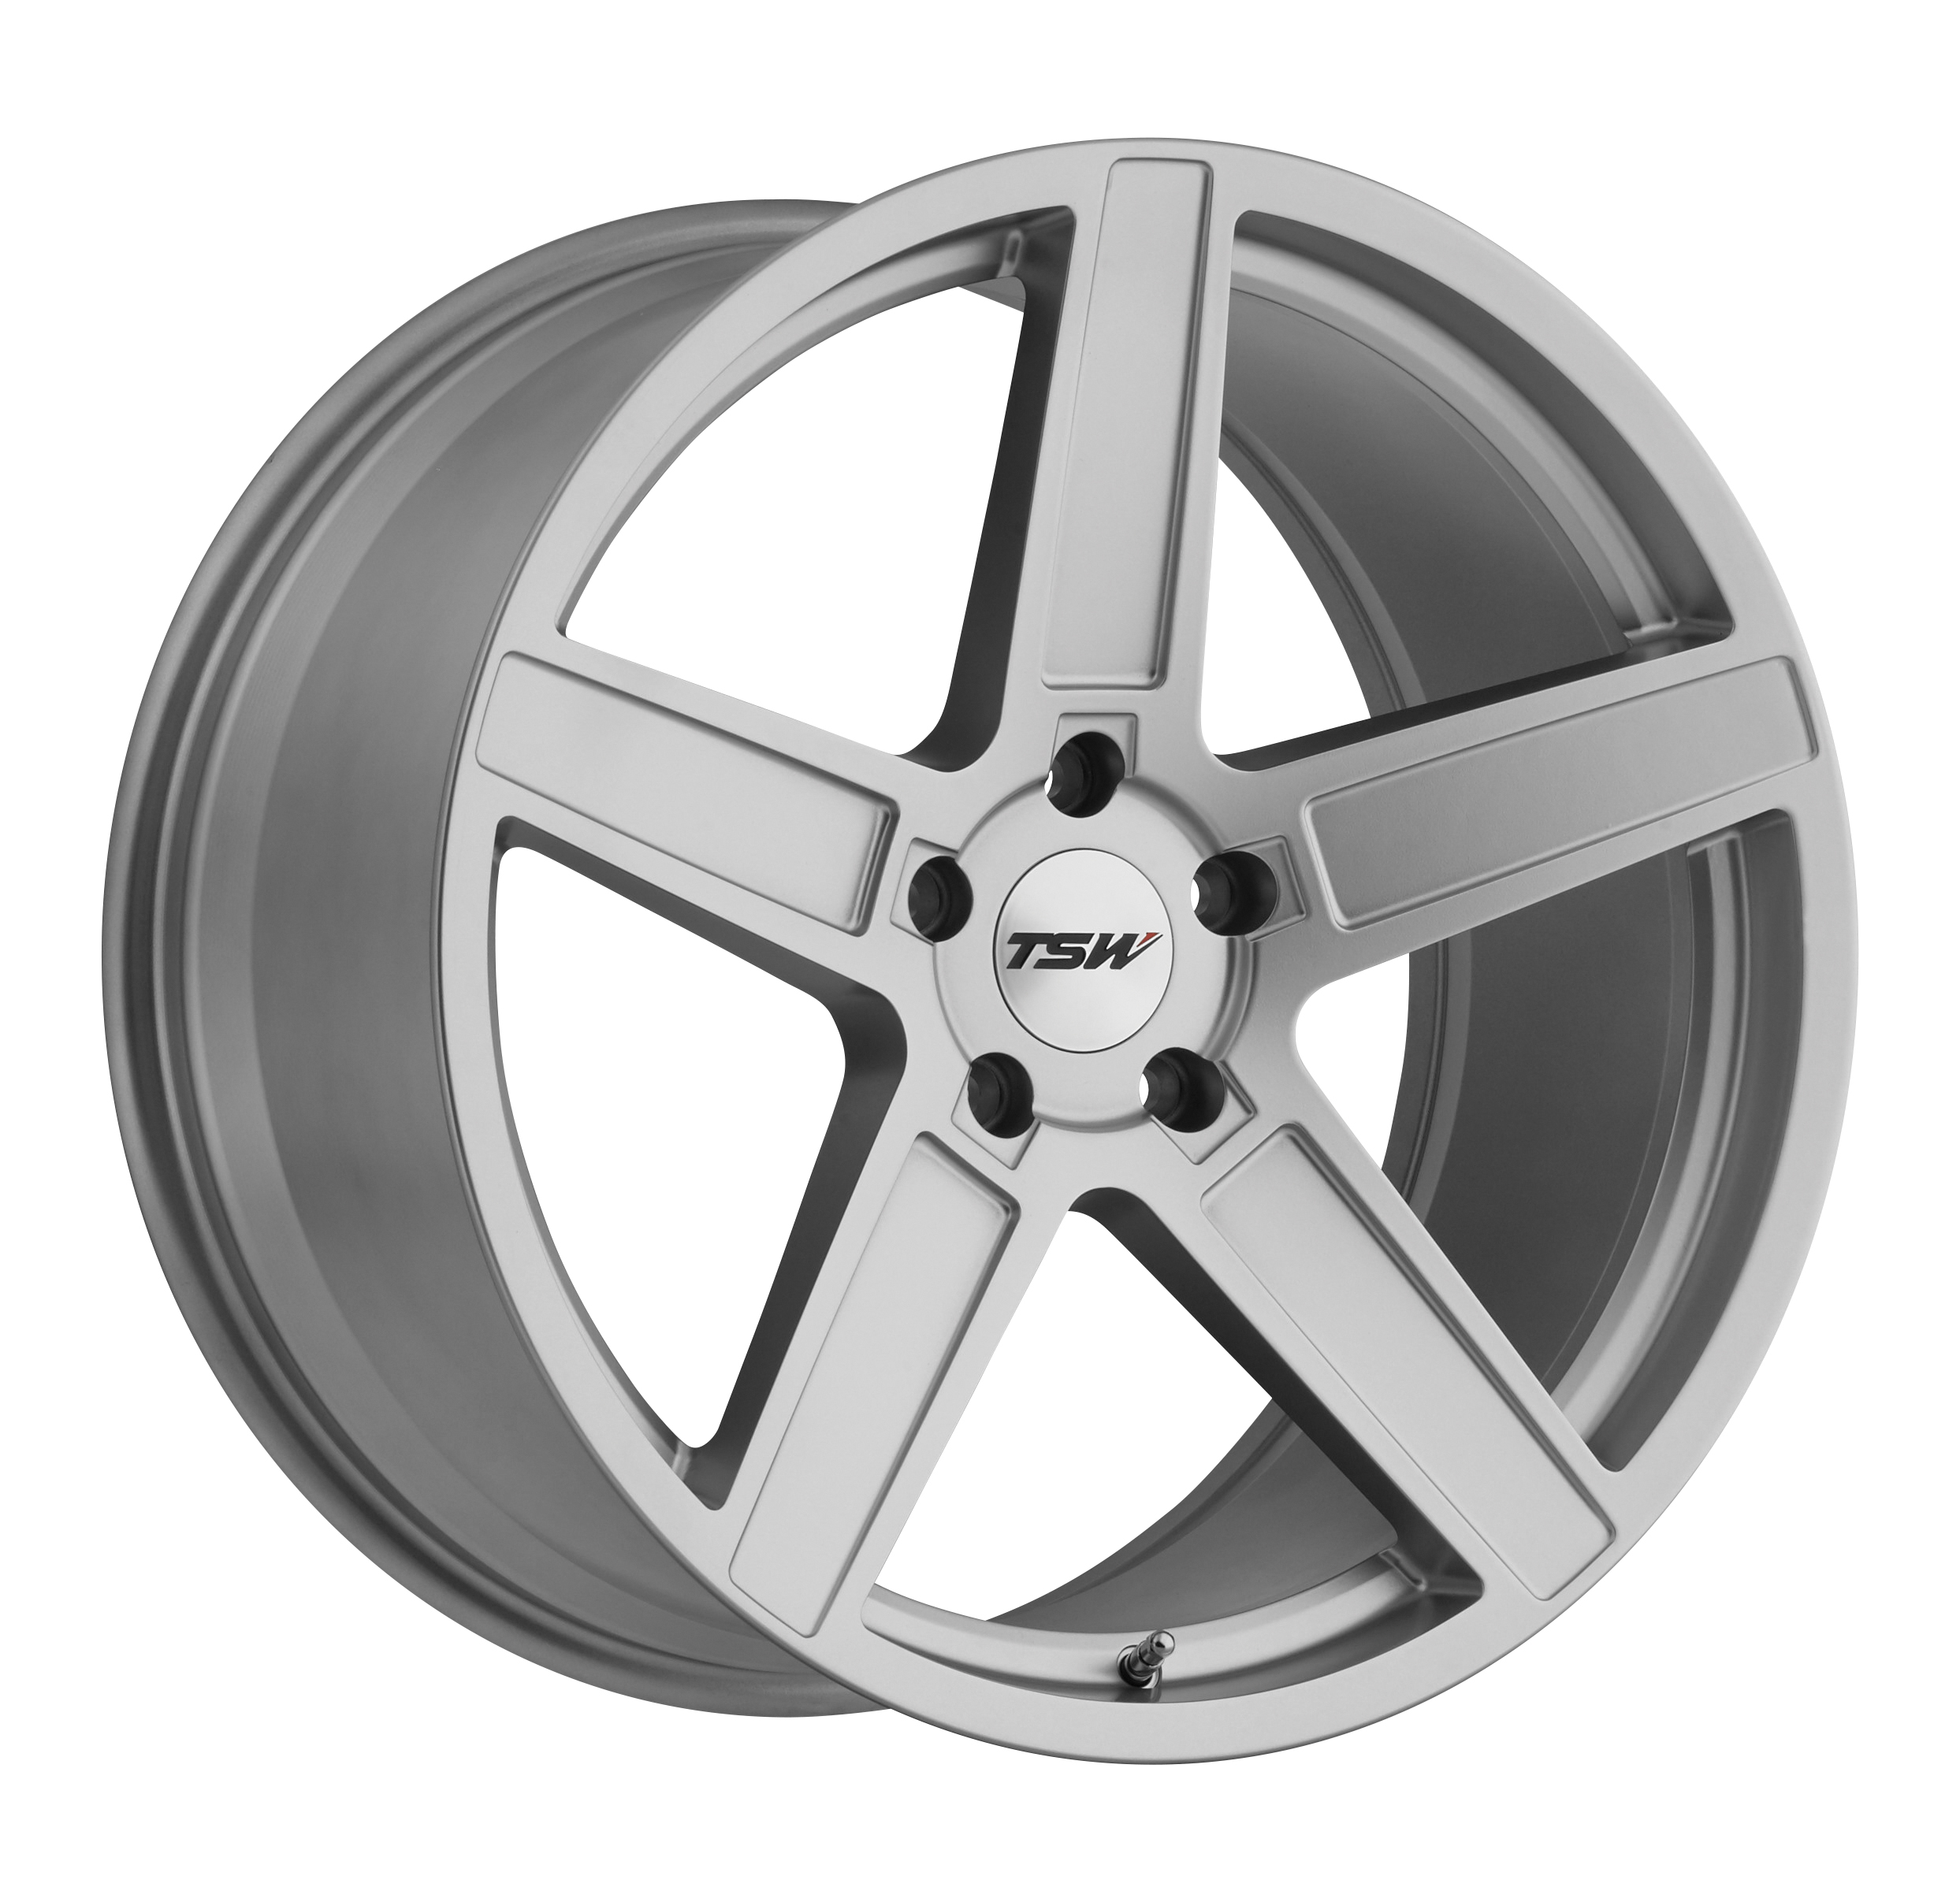 TSW Introduces the Ascent Wheel, a Distinctive New 5-spoke Aluminum ...